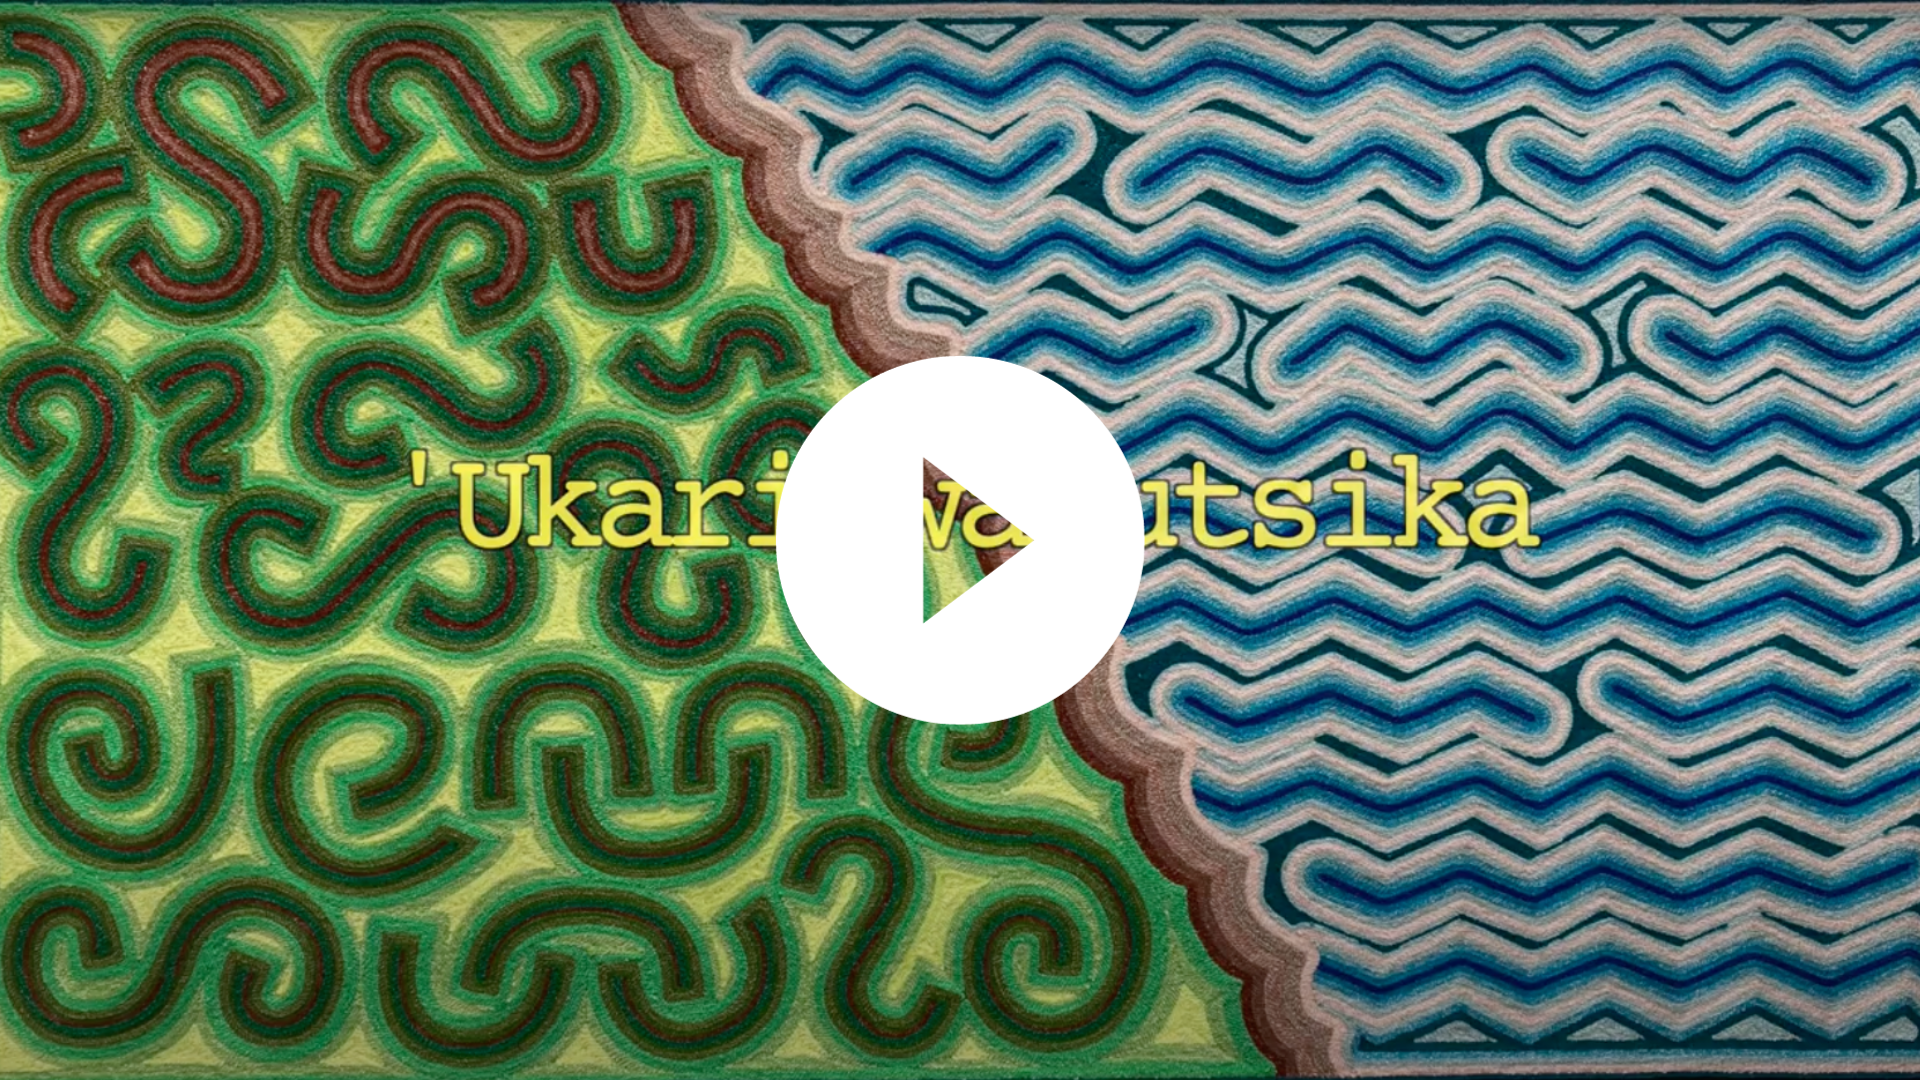 Ukari video holding image